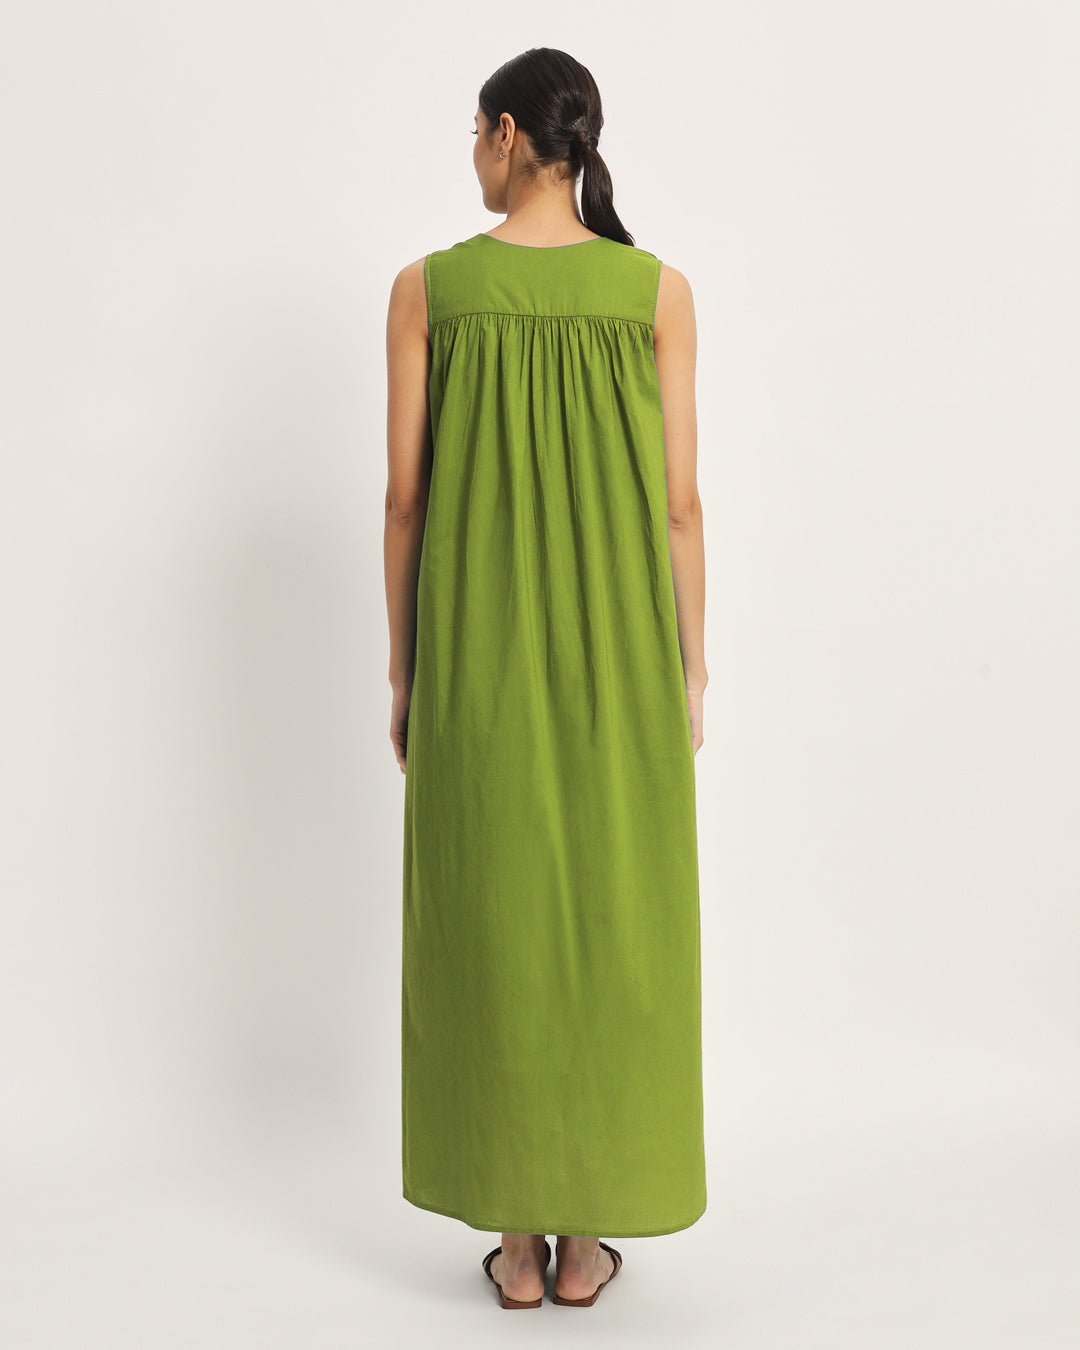 Combo: Lilac & Sage Green Mommylicious Maternity & Nursing Dress